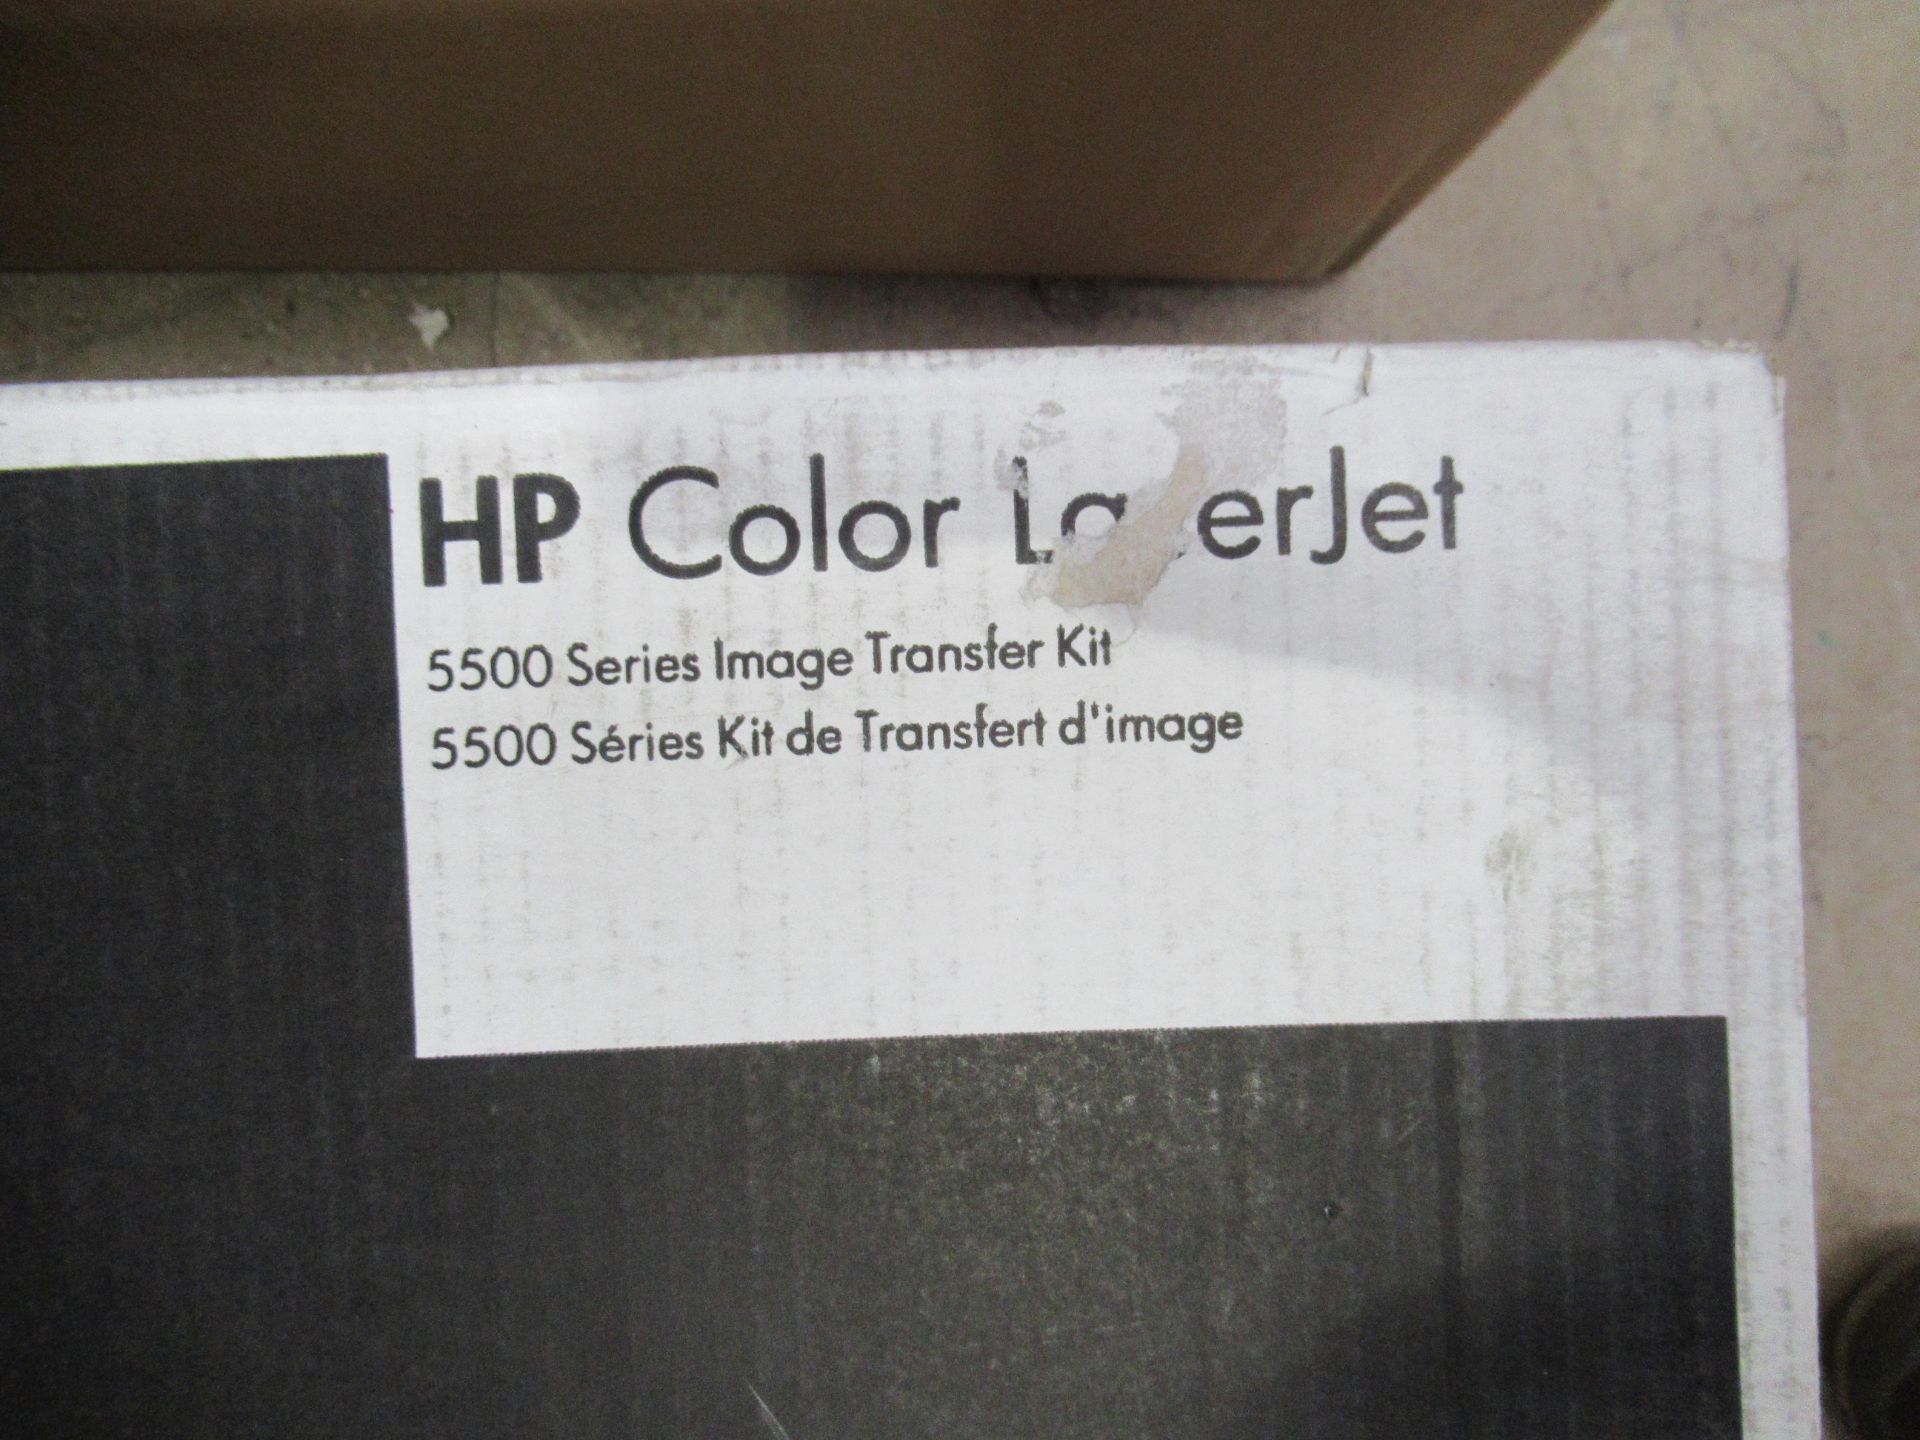 4 various HP LaserJet ink cartridges to crate with HP LaserJet 5500 image transfer kit - Image 7 of 7